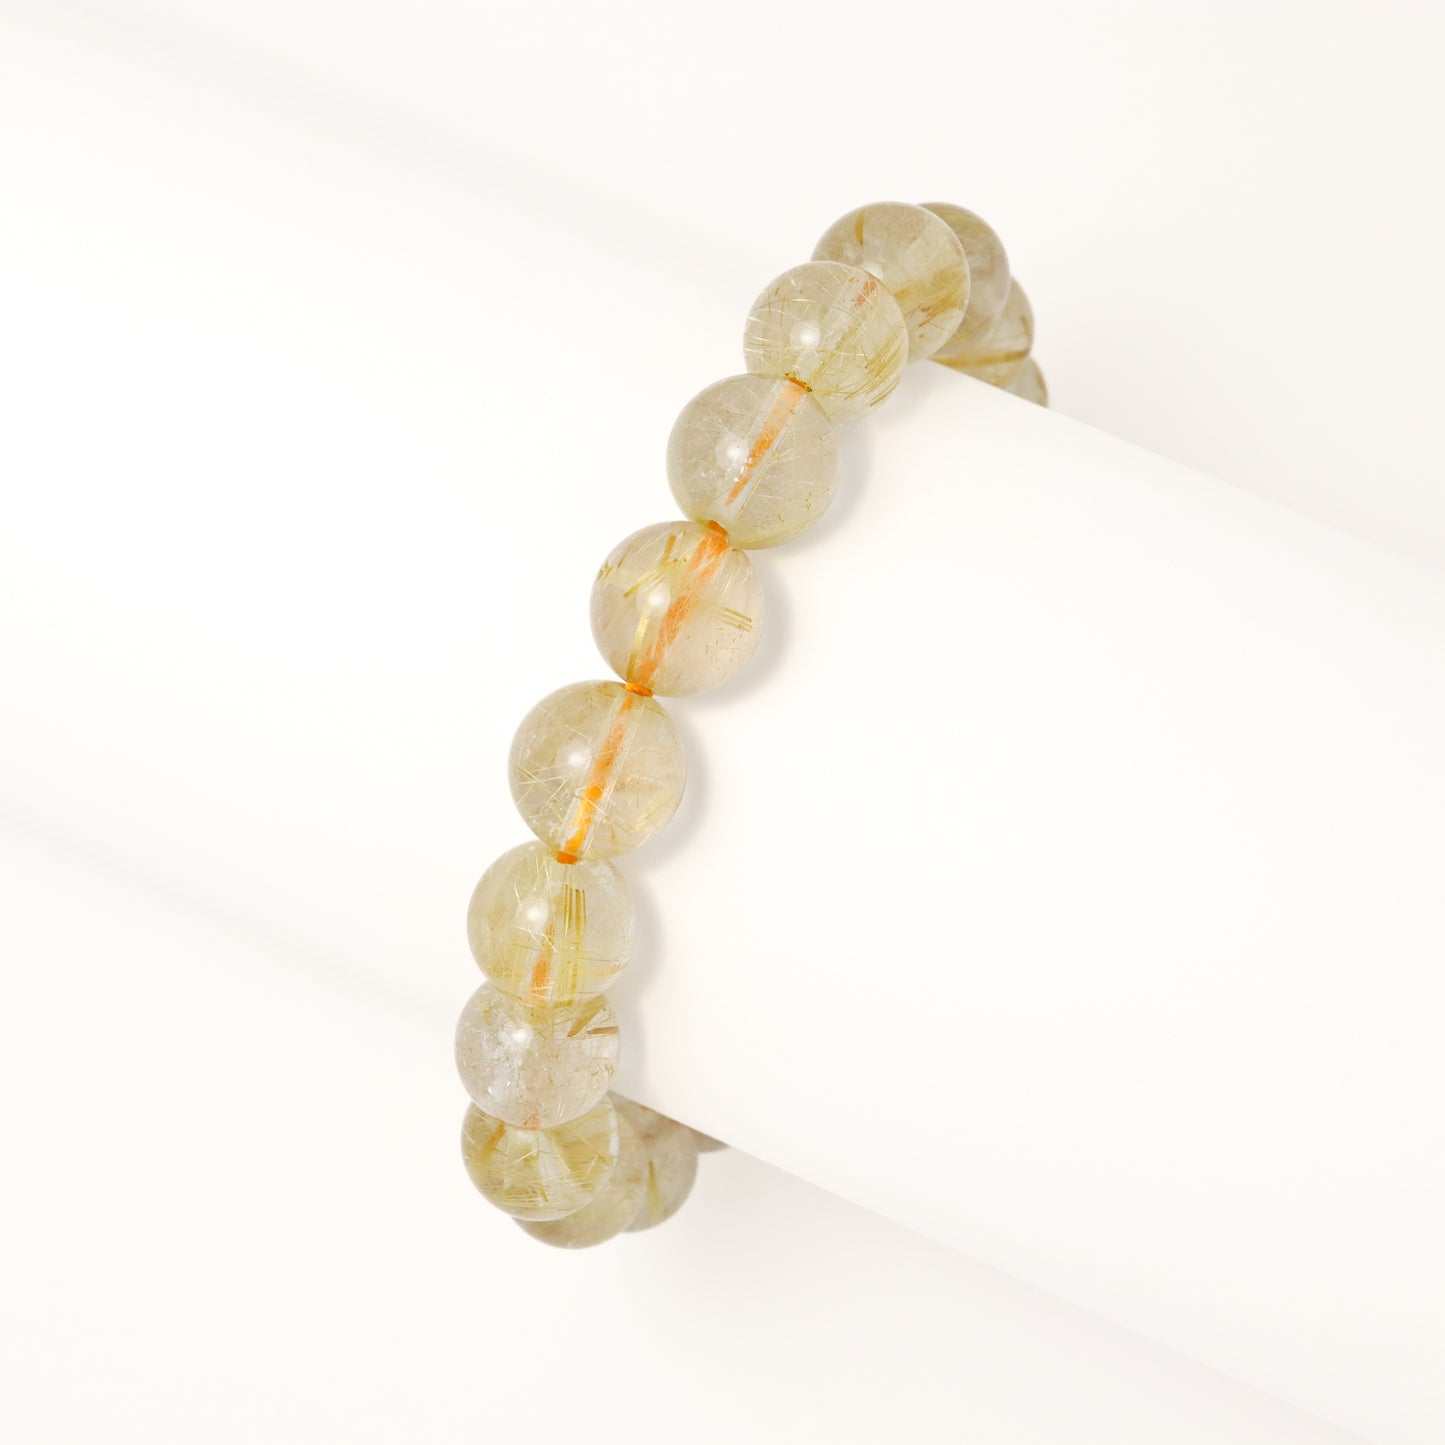 Blonde Beauty - Golden Rutilated Quartz Titanium Crystal Bracelet (10-10.5mm)